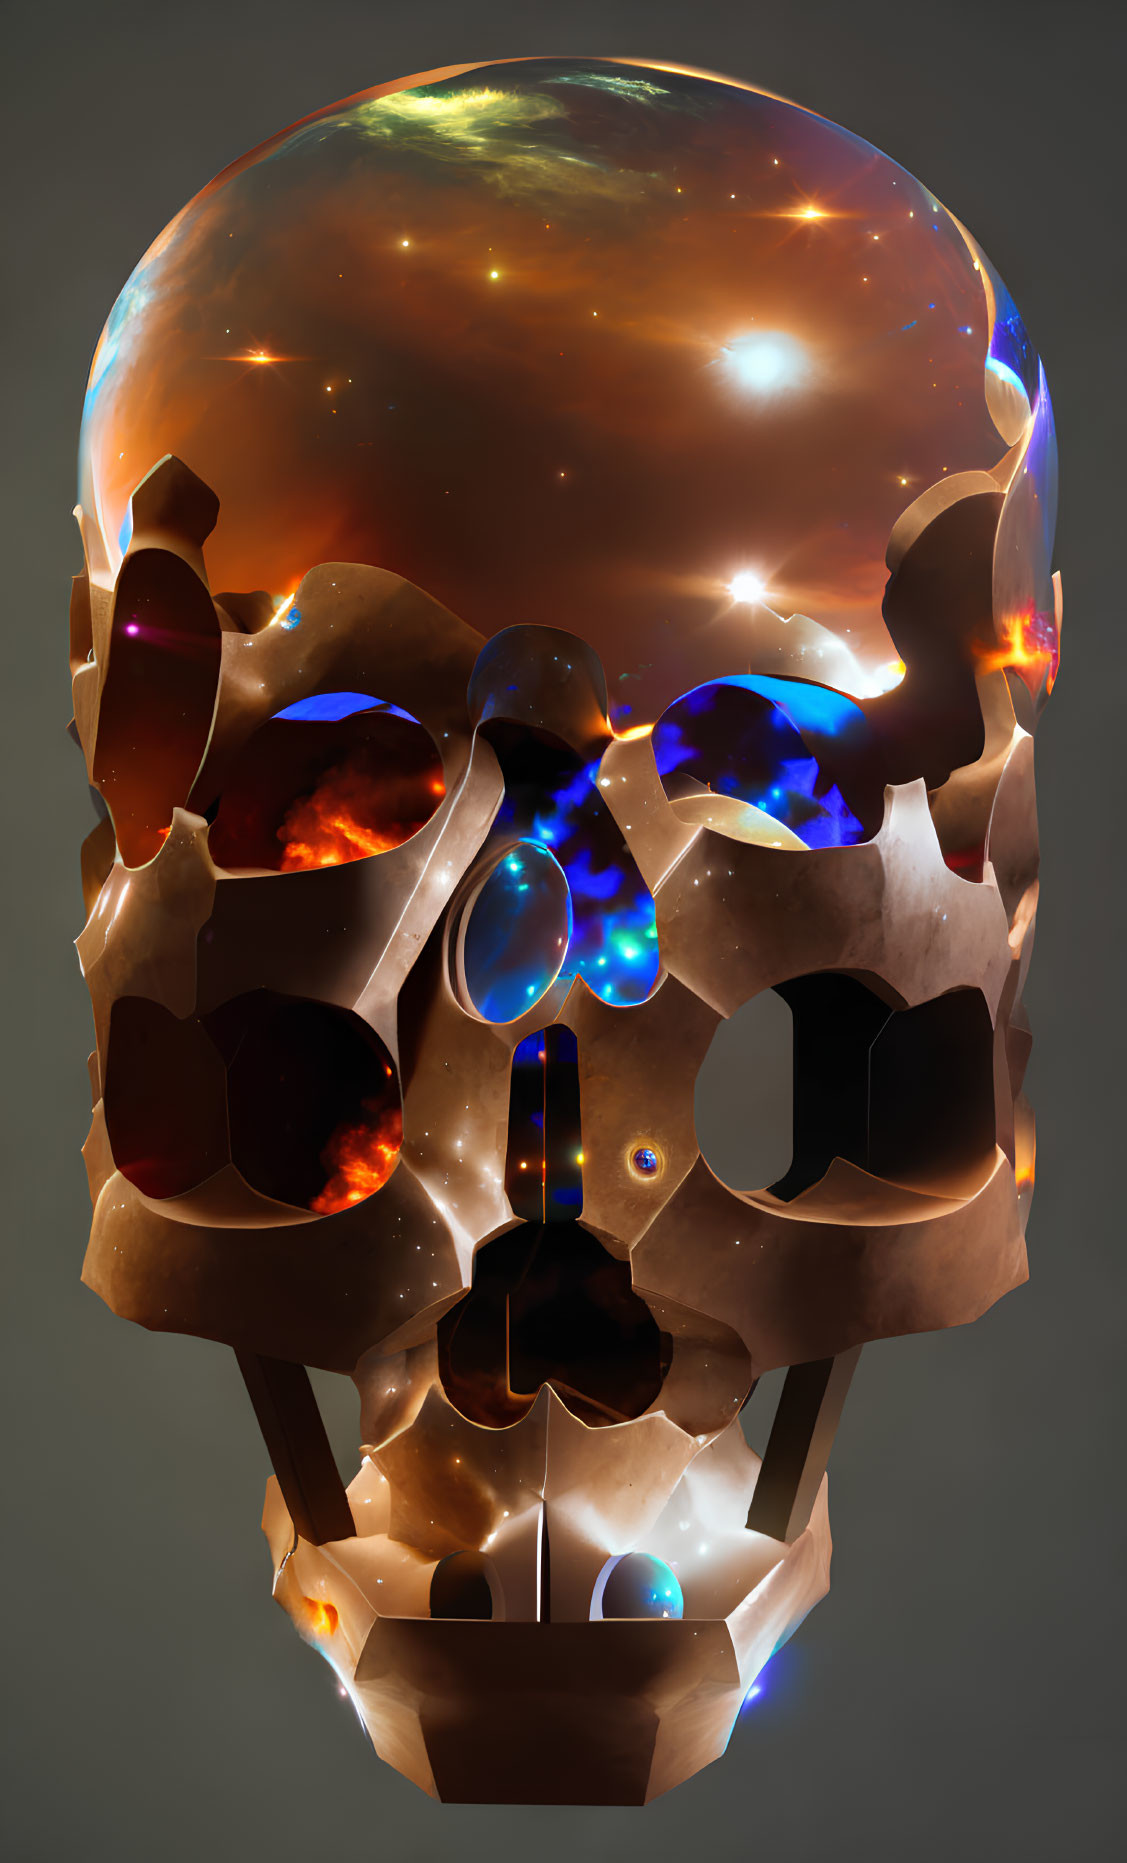 Colorful Cosmic Patterns on Reflective Metallic Skull